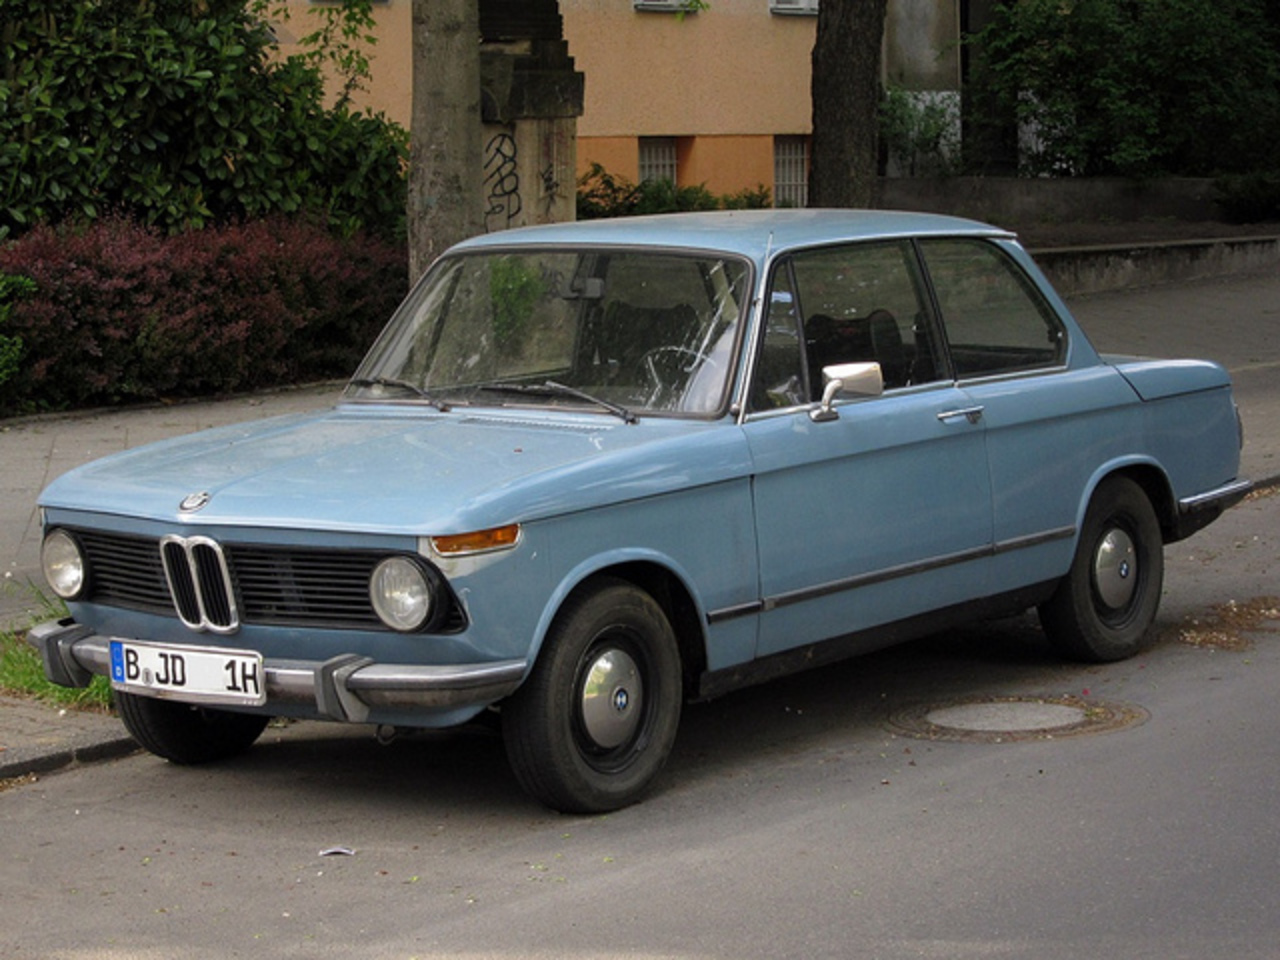 BMW 1502 | Flickr - Photo Sharing!